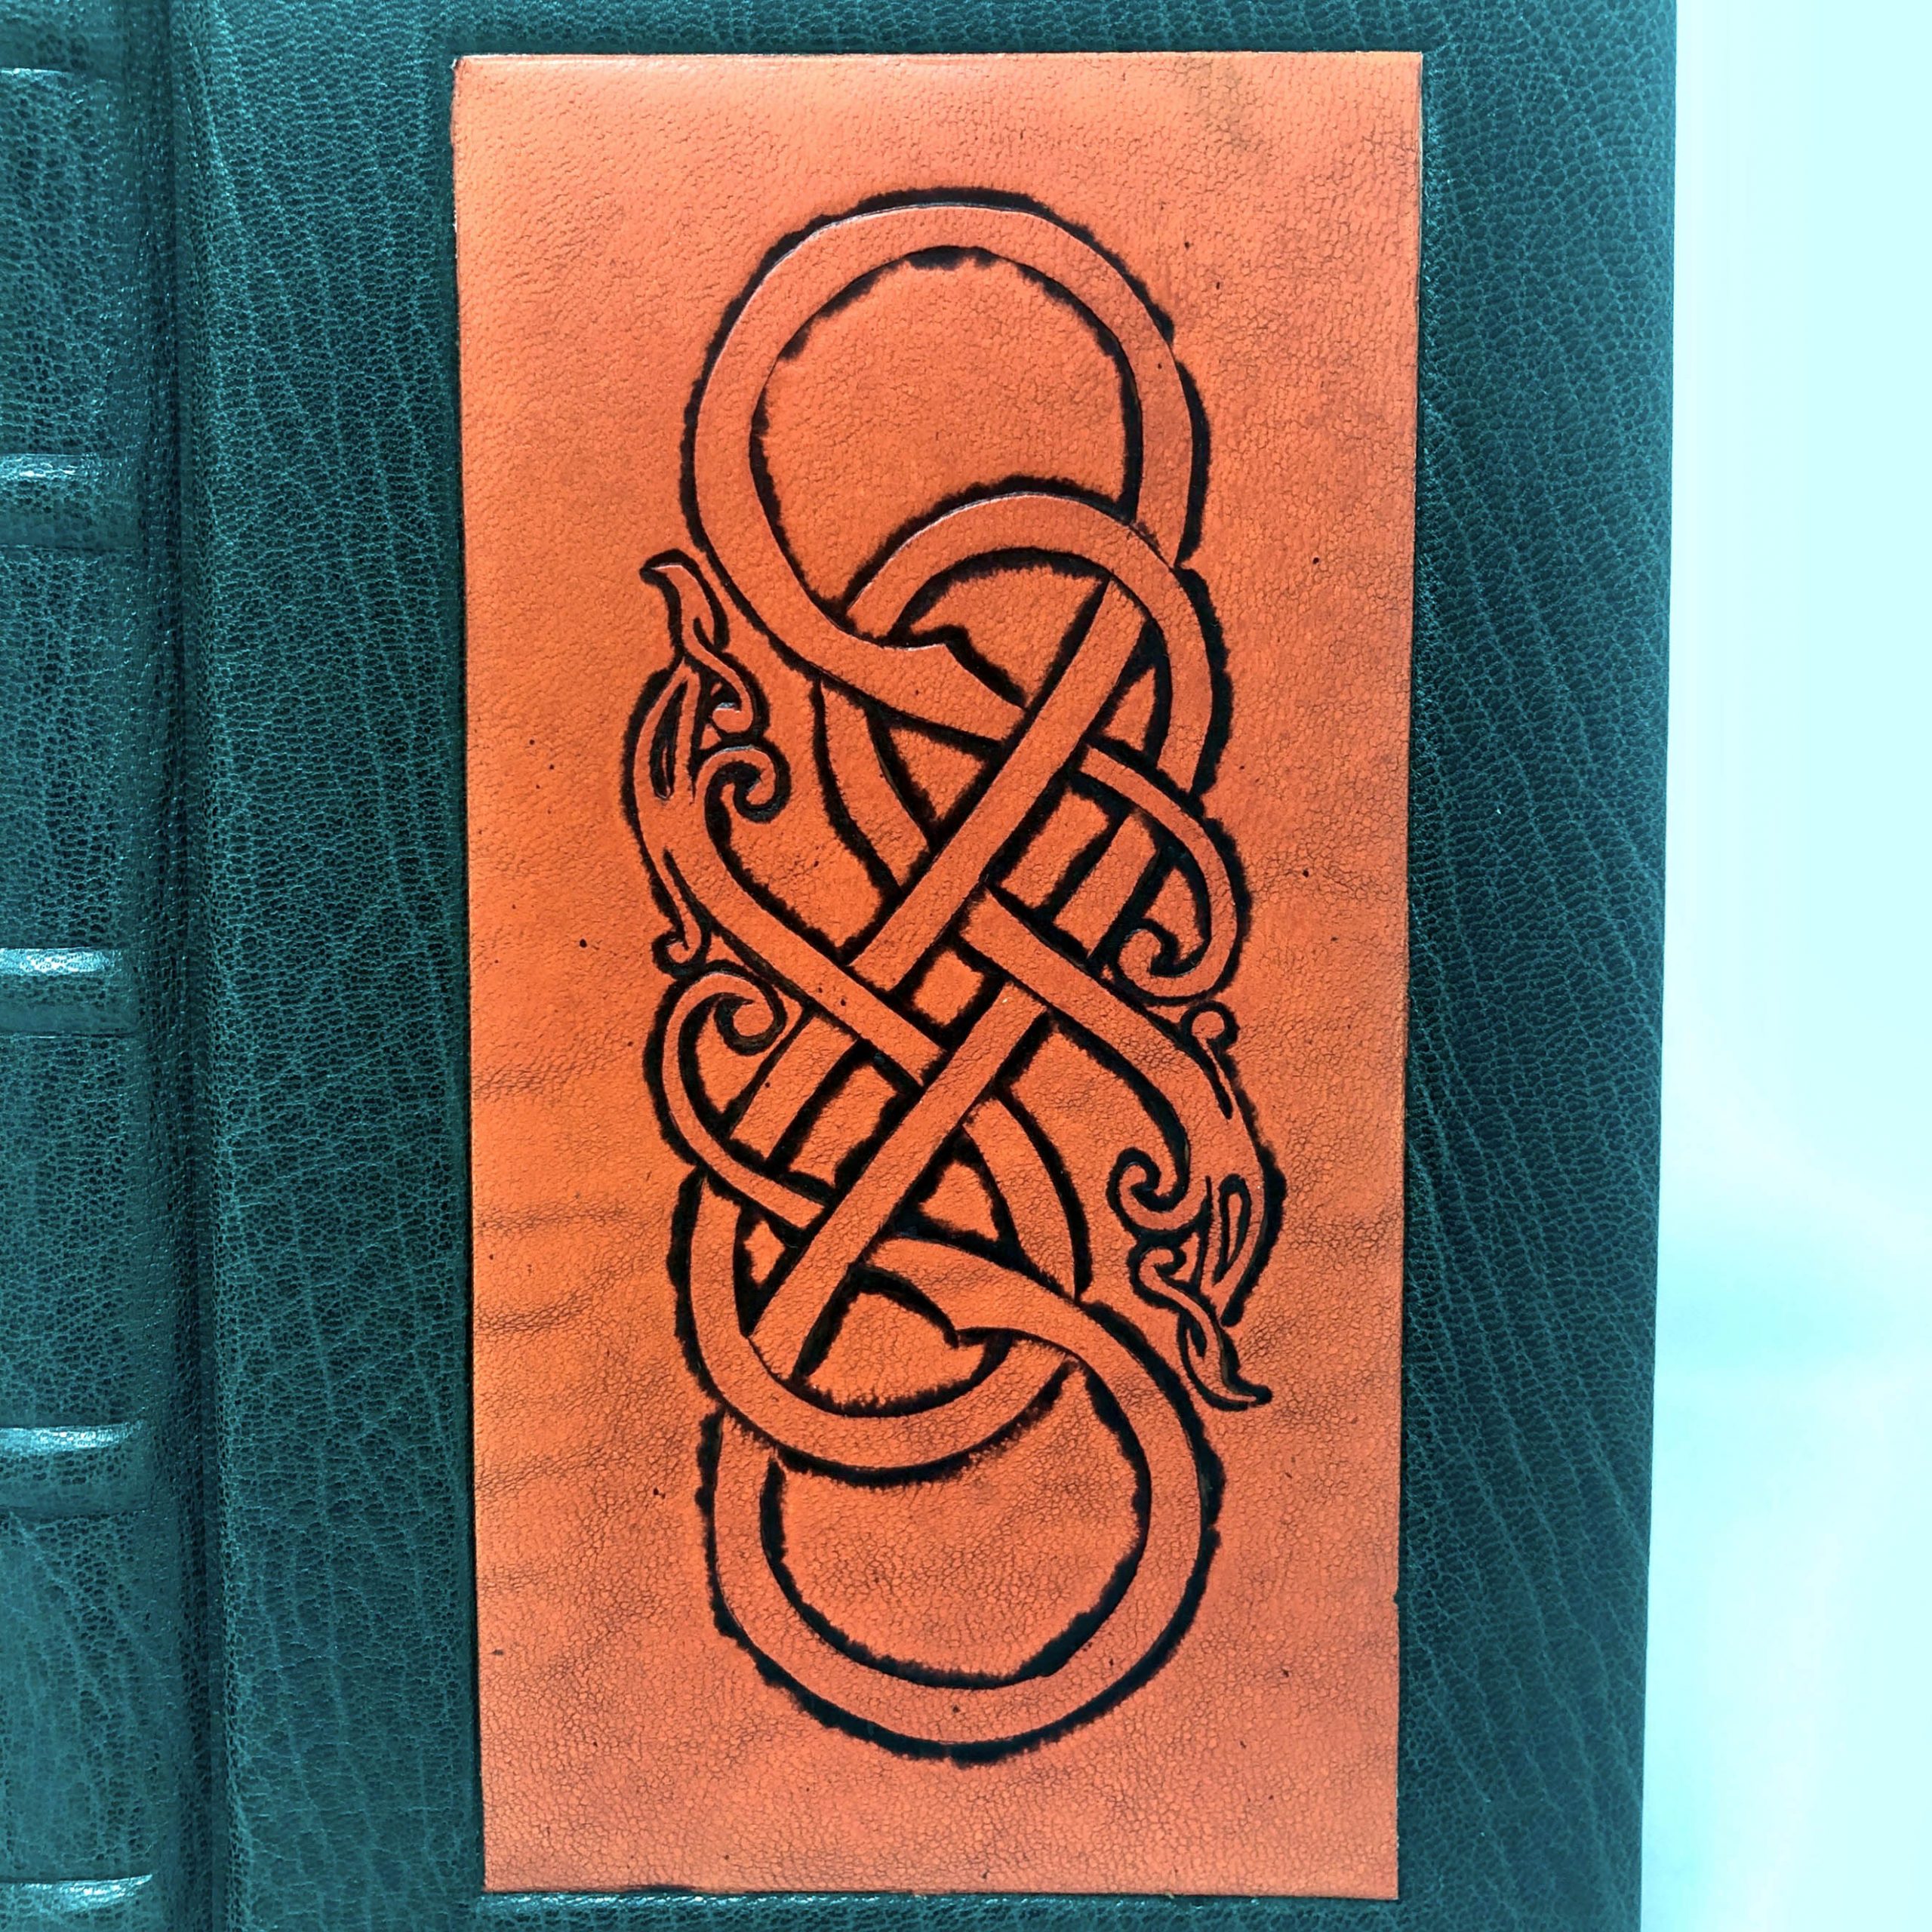 Norse Journal Design | Boston Harbor Bookbindery
https://bostonharborbooks.com/portfolio/norse-journal/